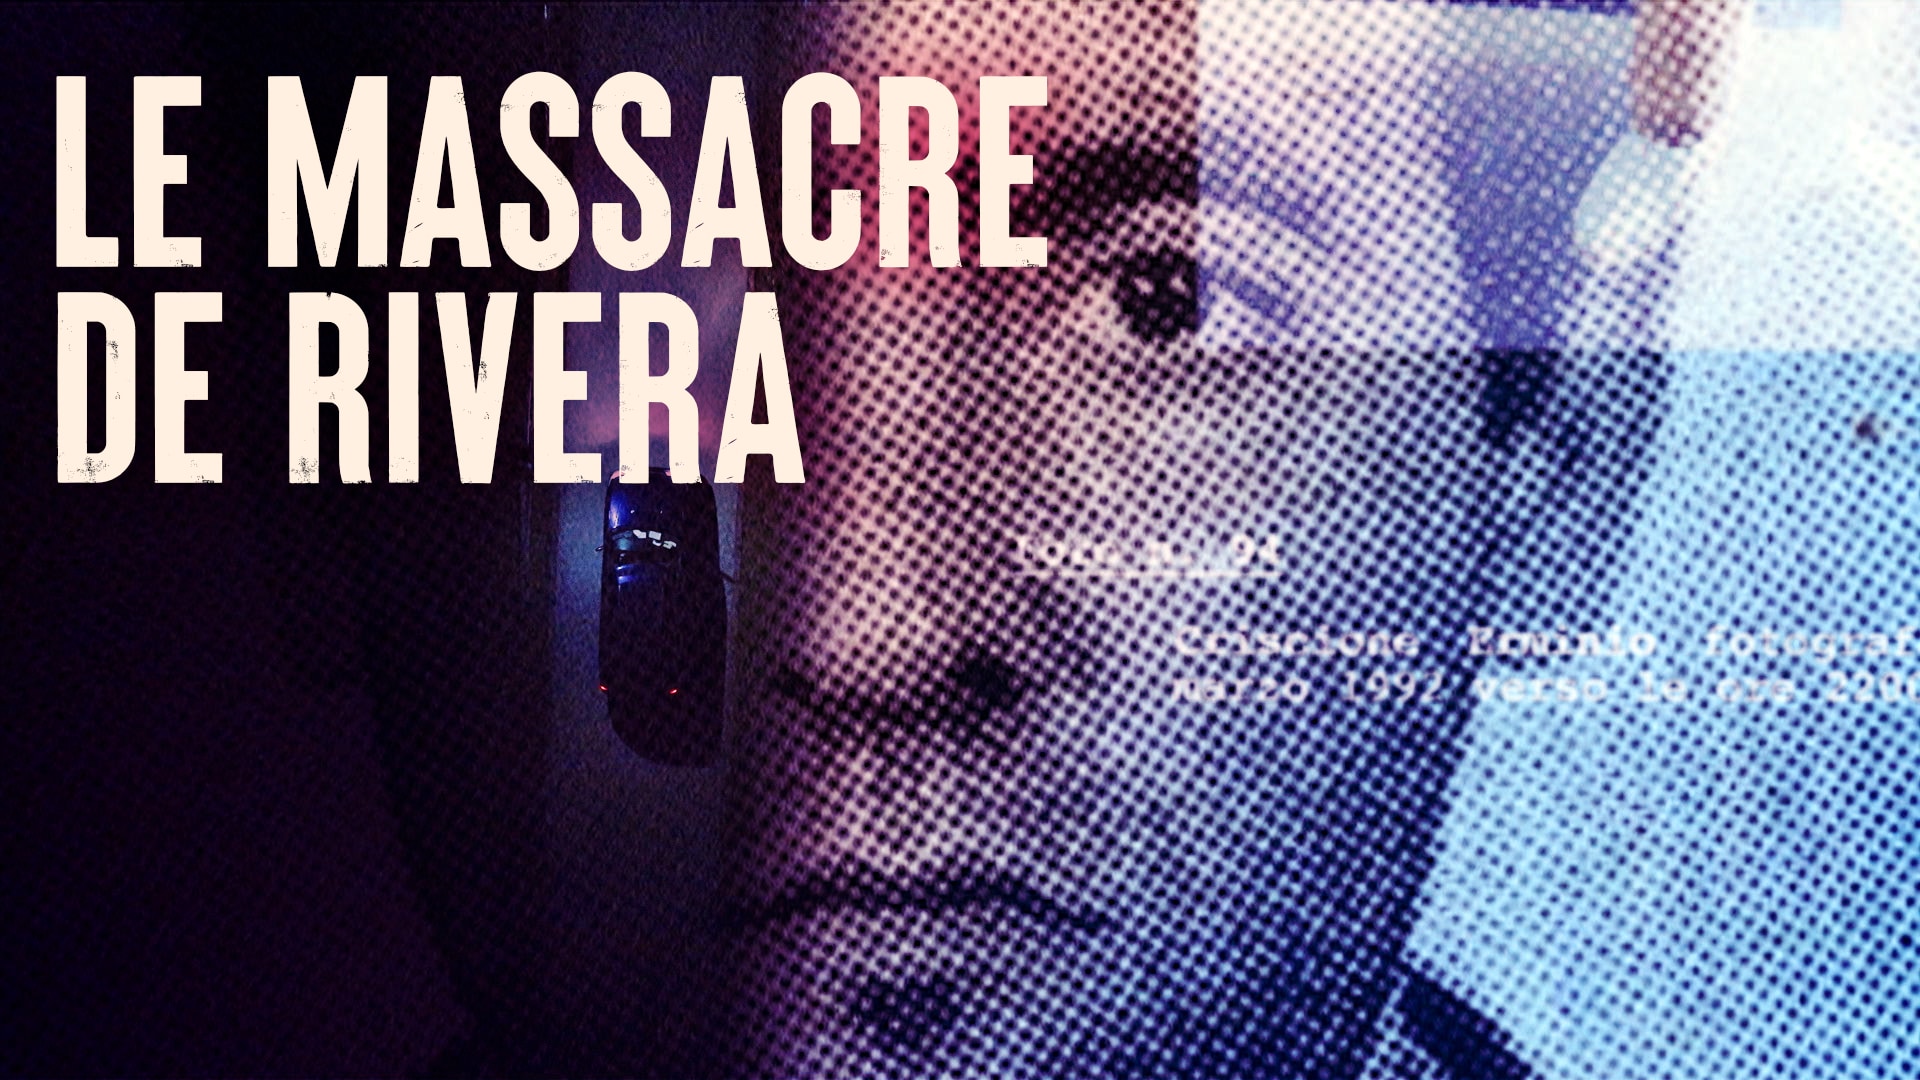 Le massacre de Rivera